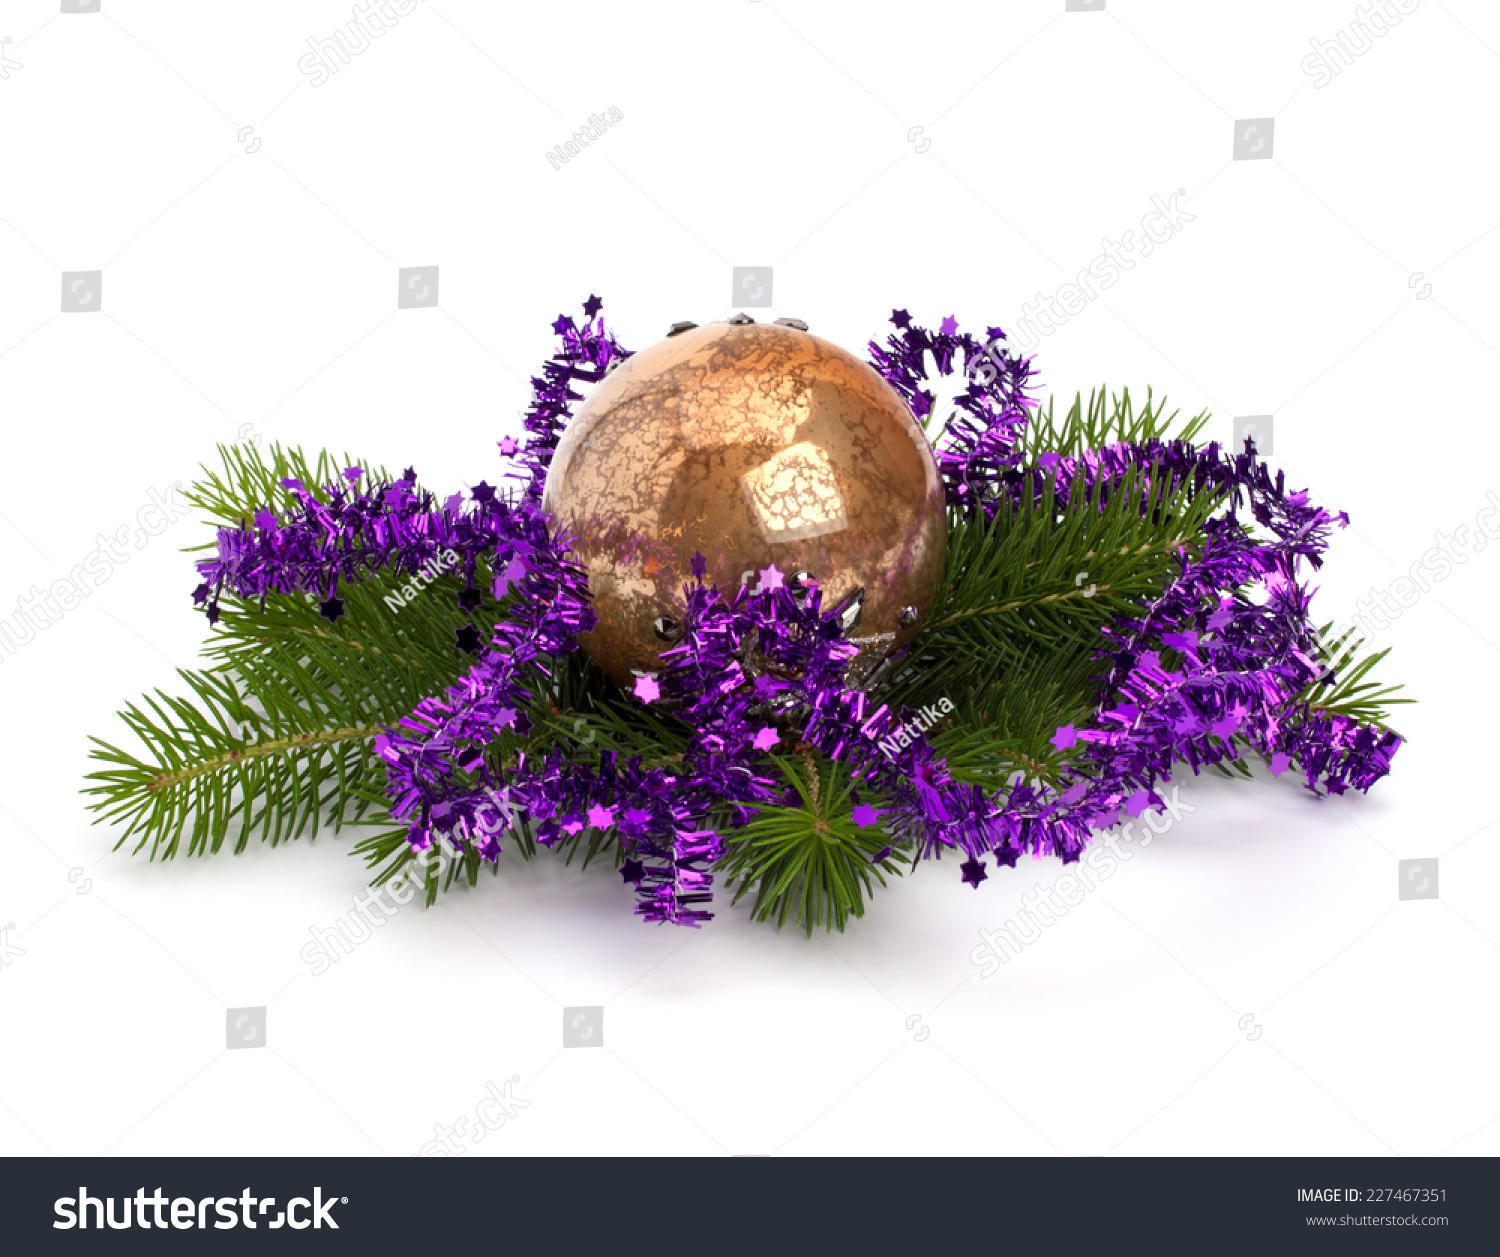 Christmas ball decoration isolated on white background #227467351